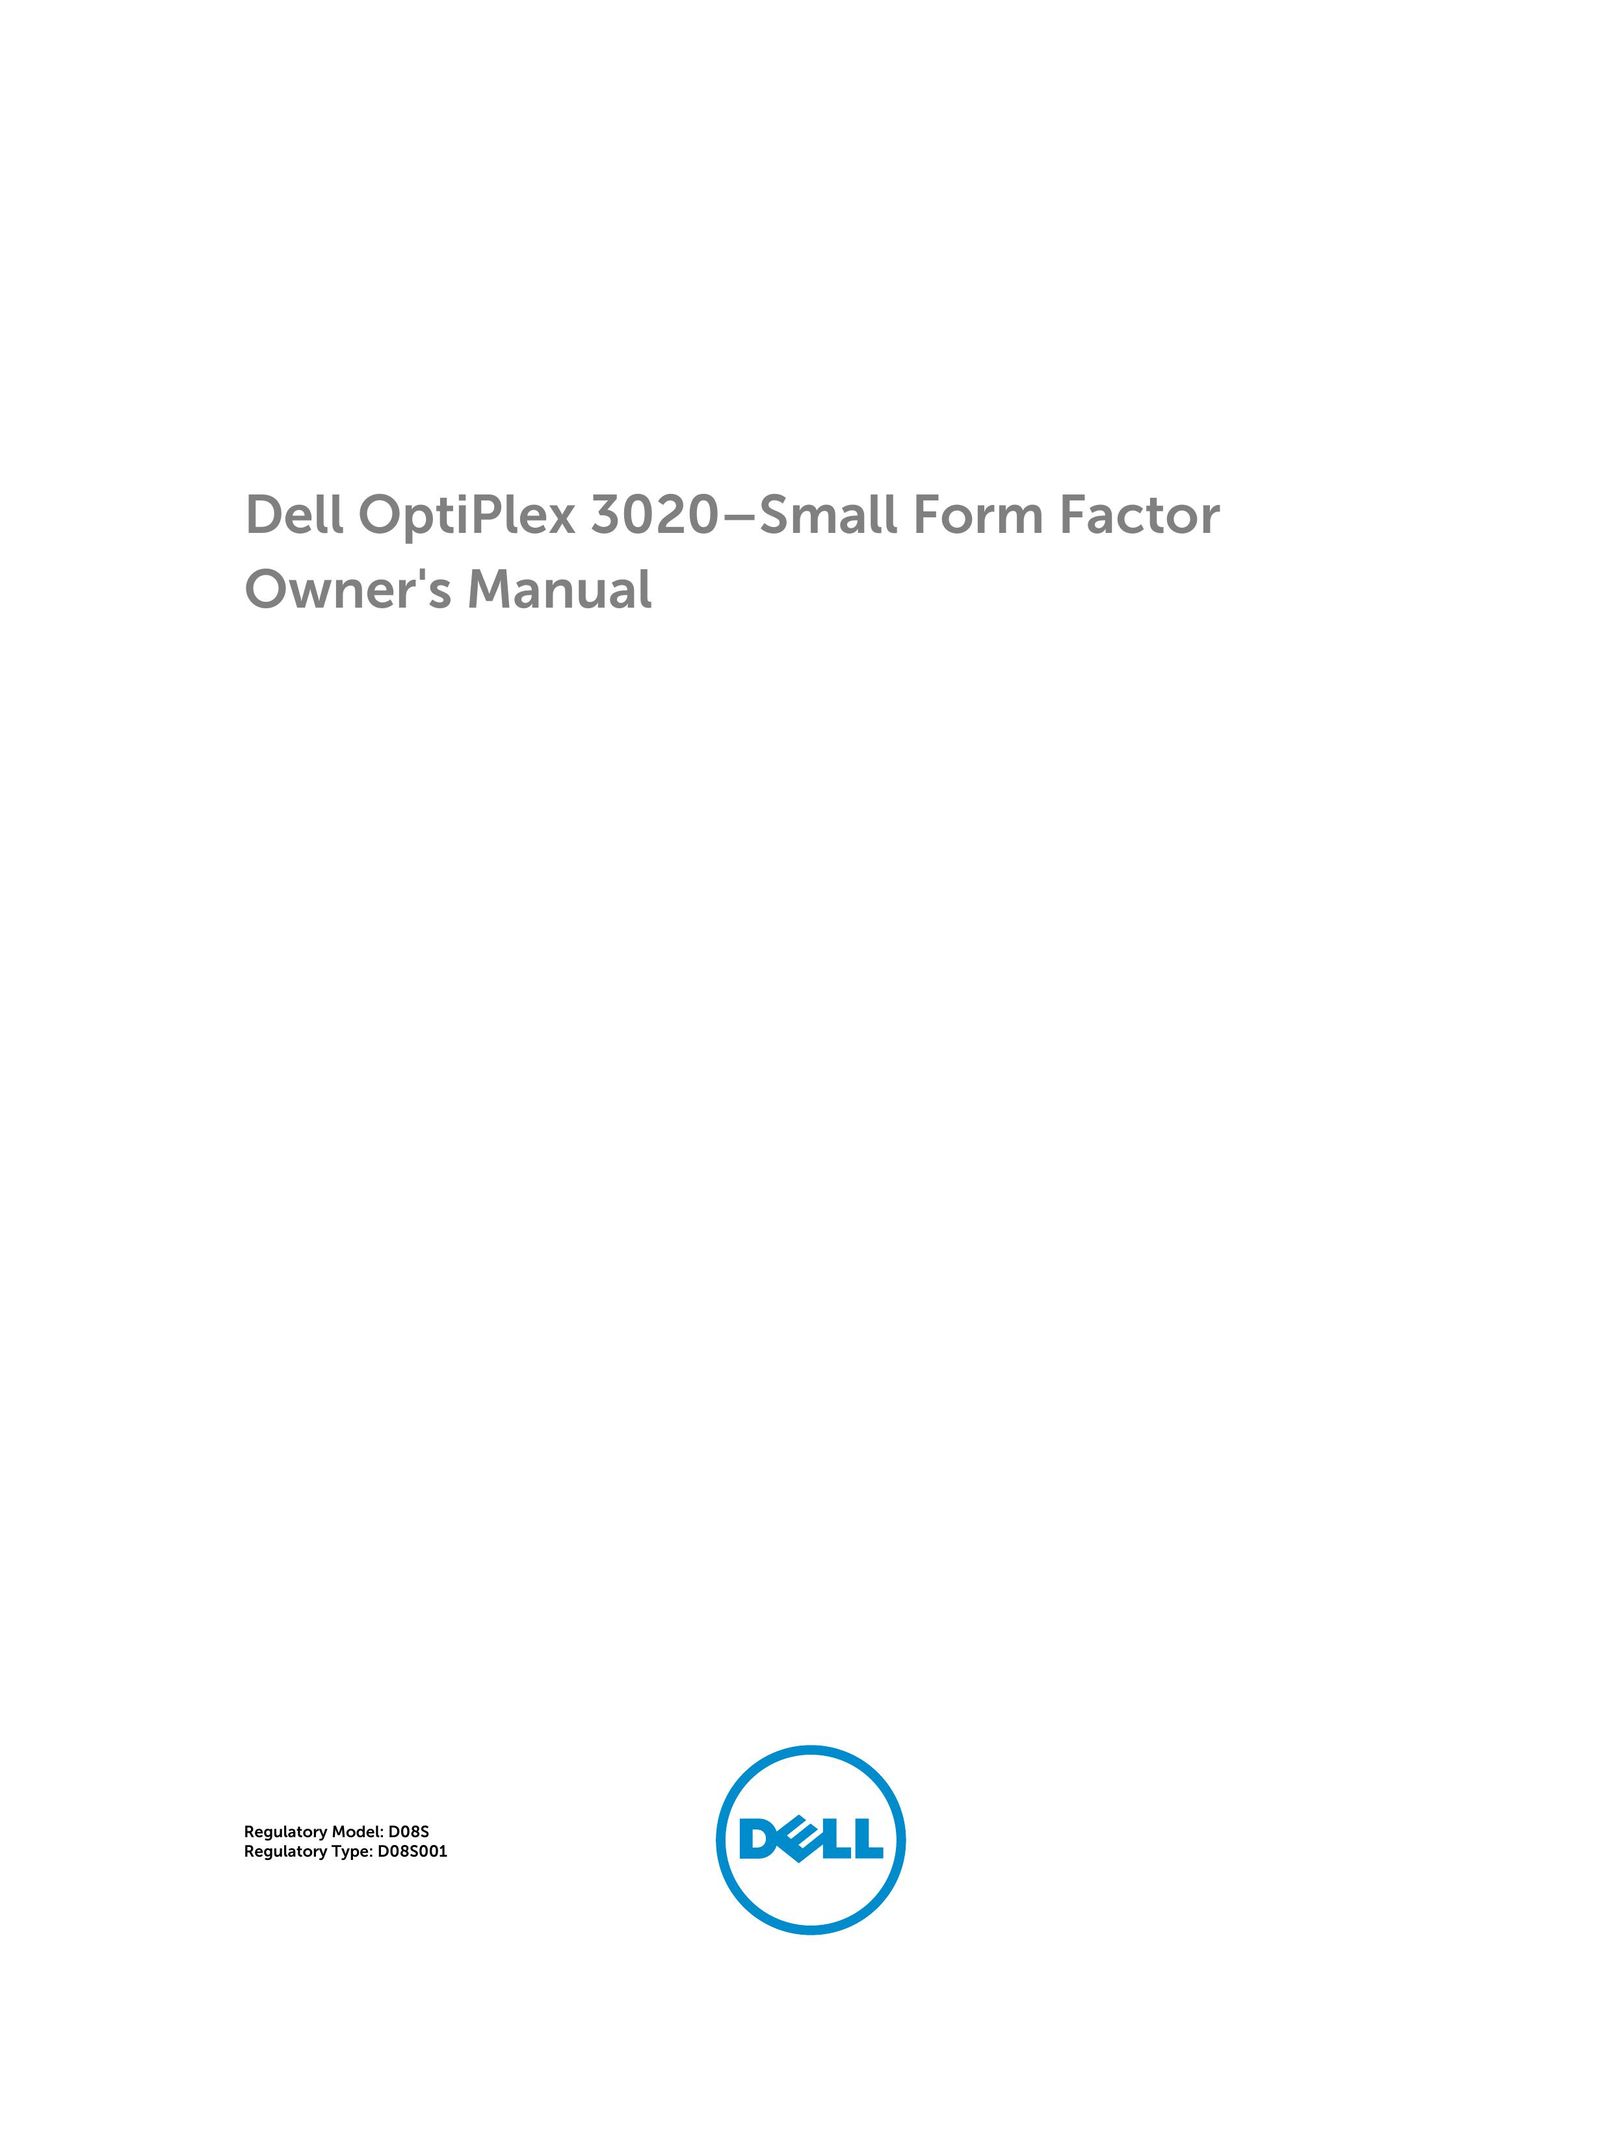 Dell D08S Calculator User Manual